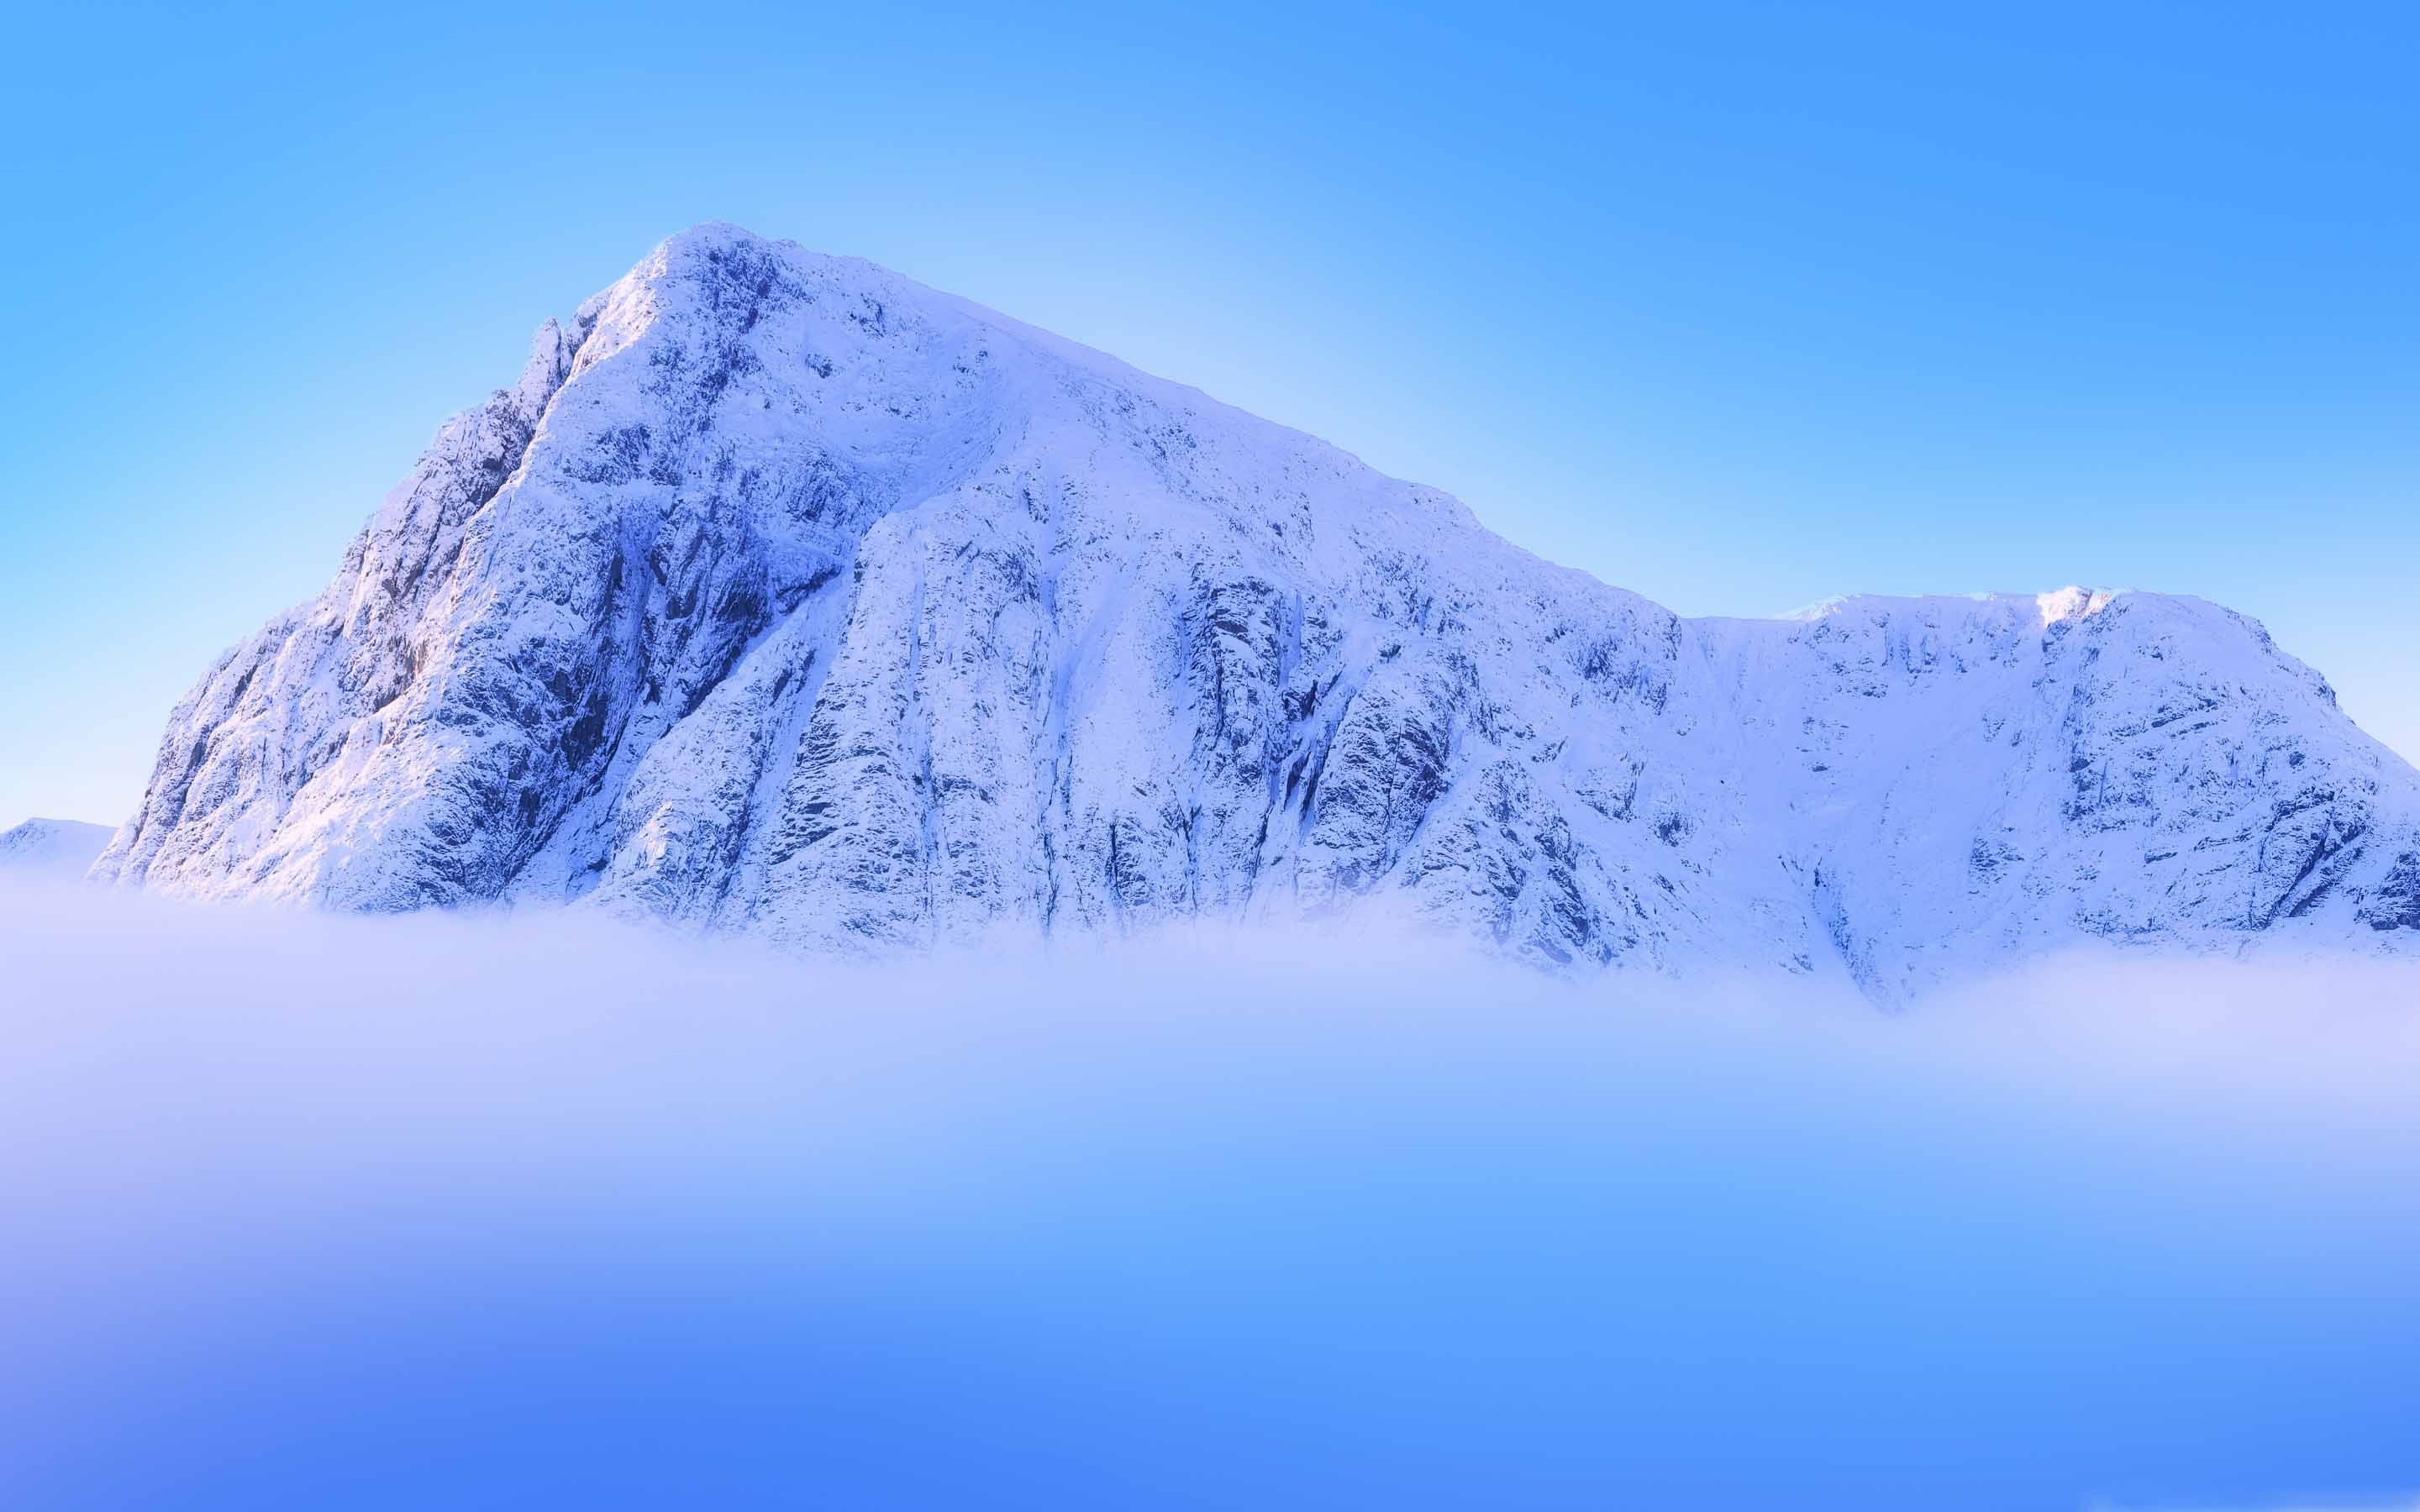 Snowy Mountain Peak Above Clouds .allmacwallpaper.com